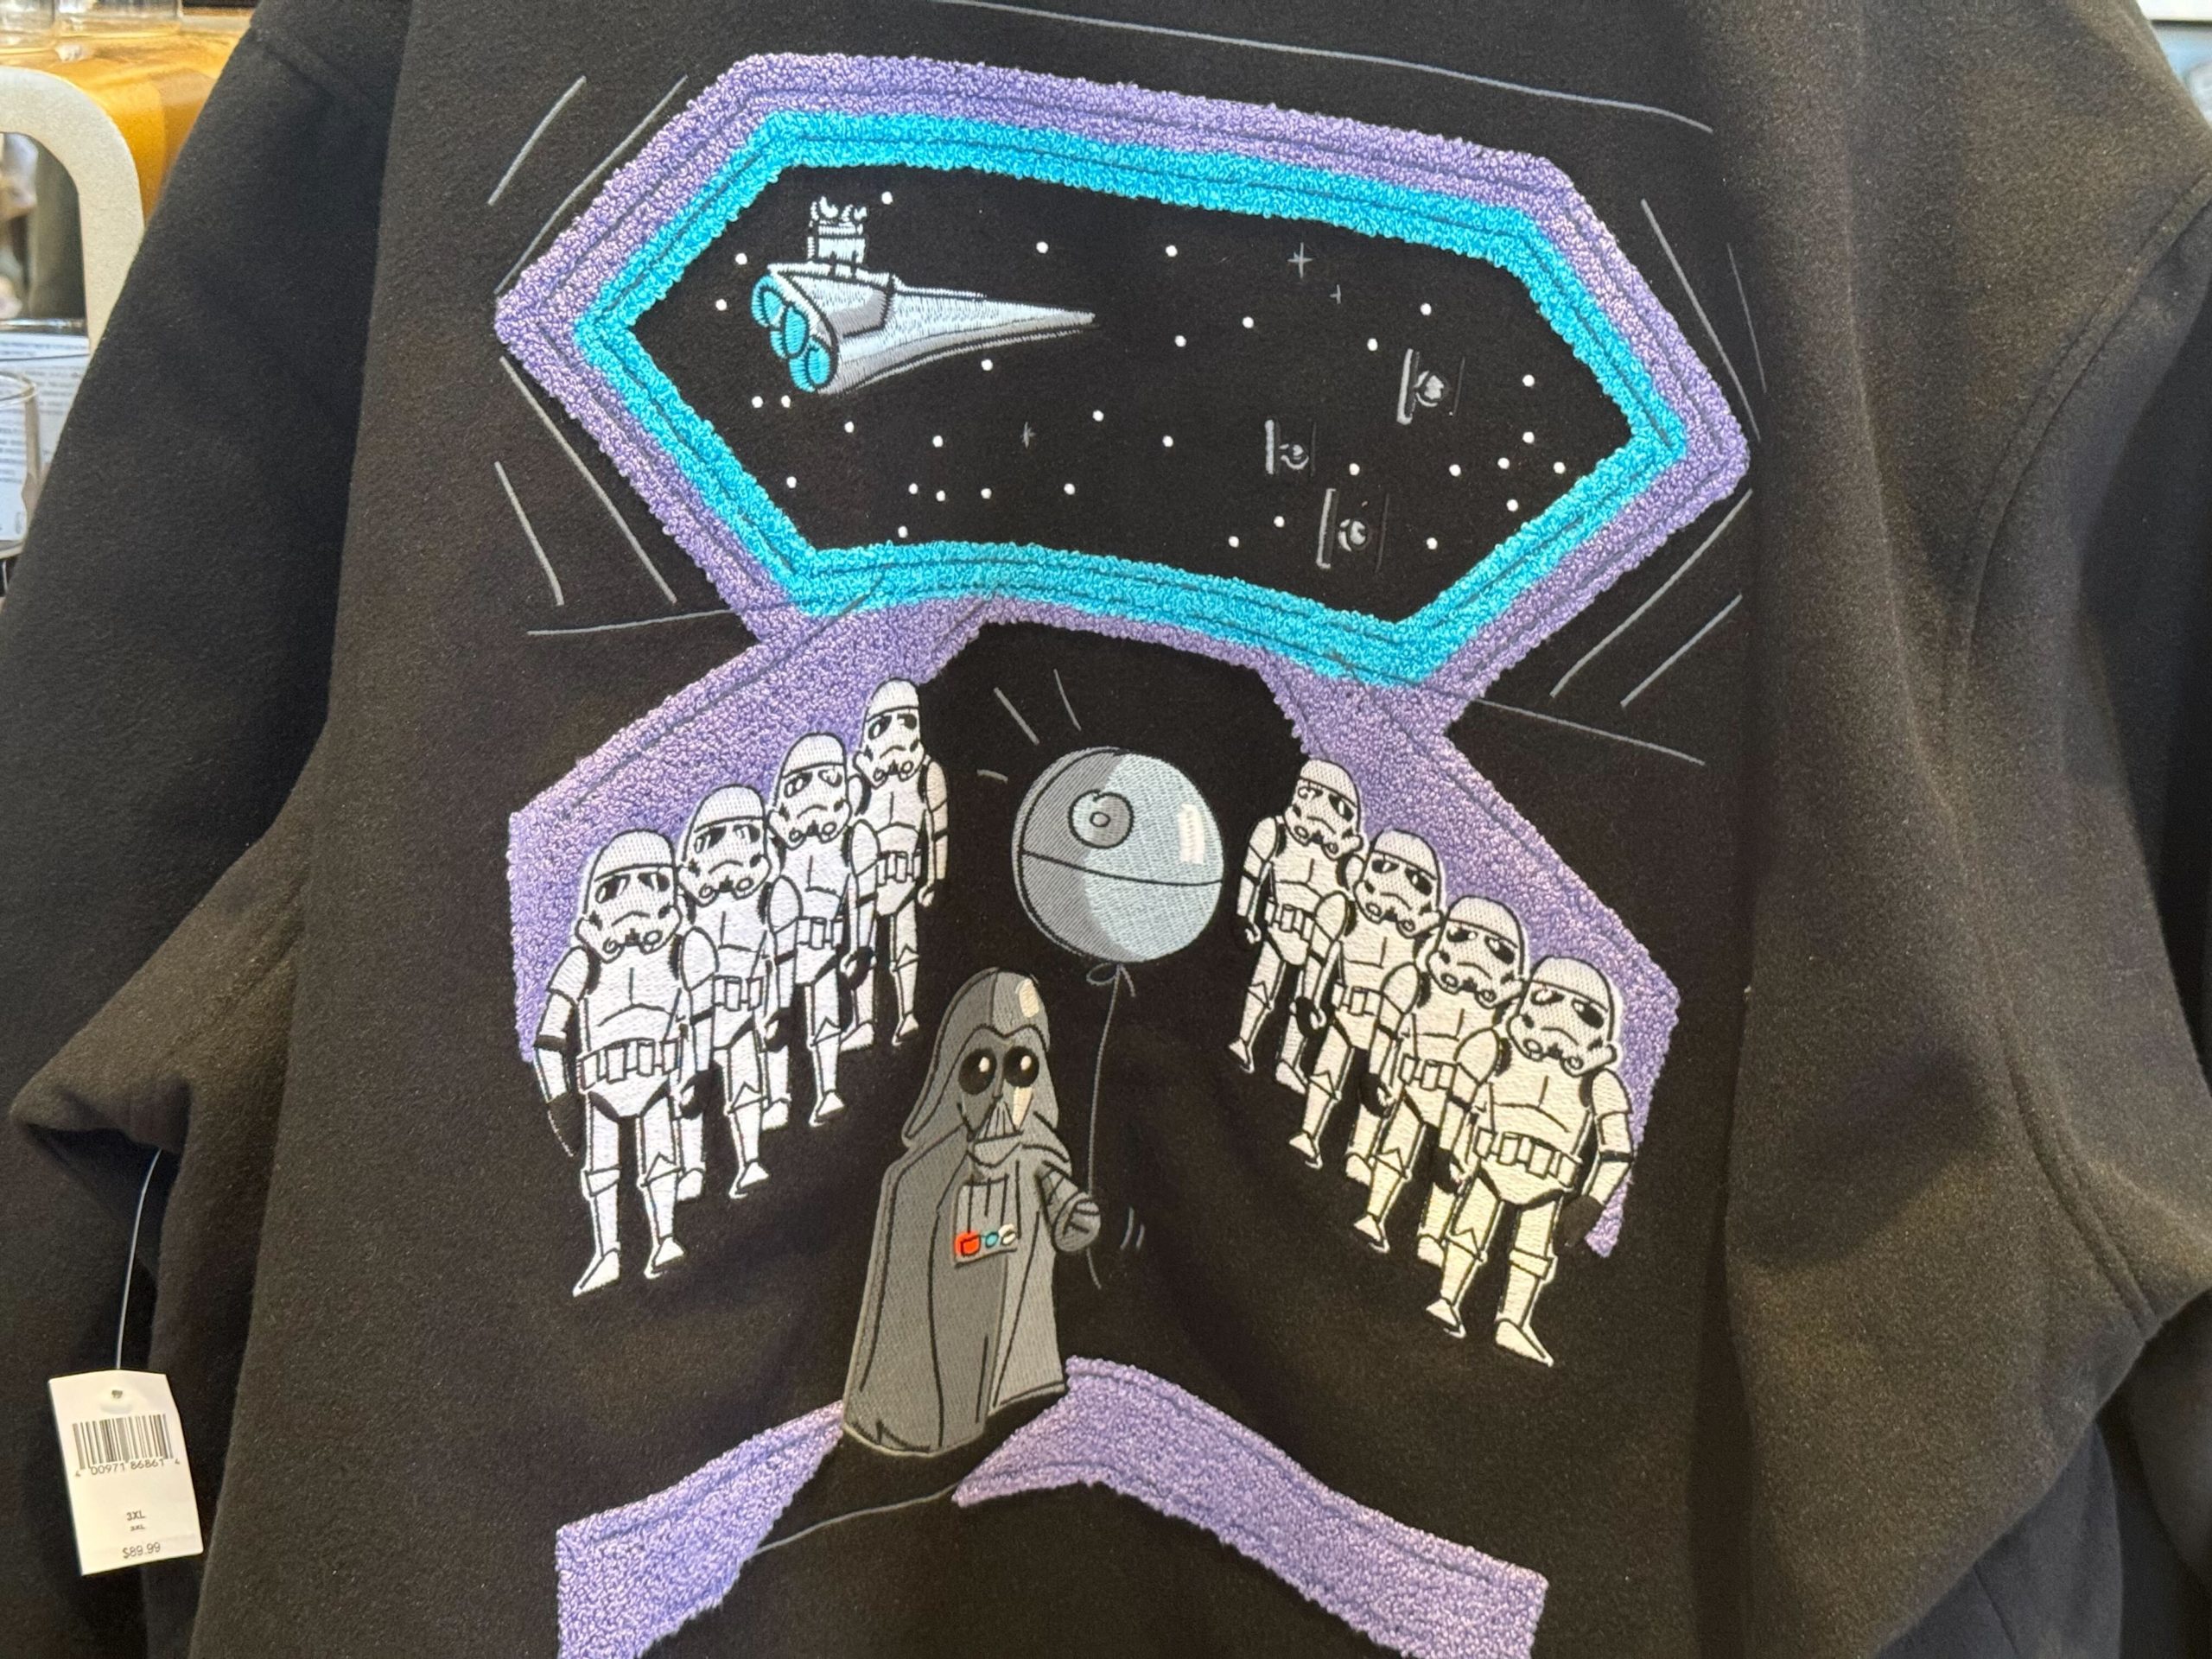 Star Wars Button Up Sweater